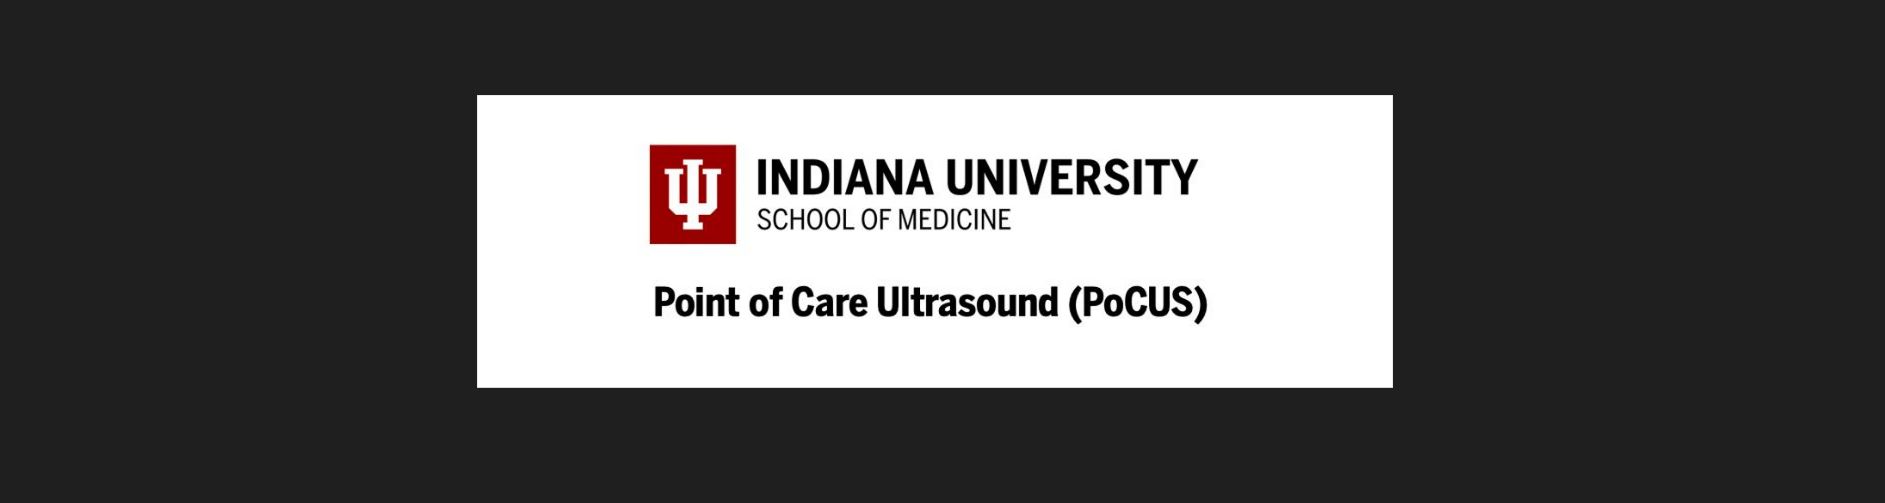 IUSM Point of Care Ultrasound Cardiopulmonary Banner